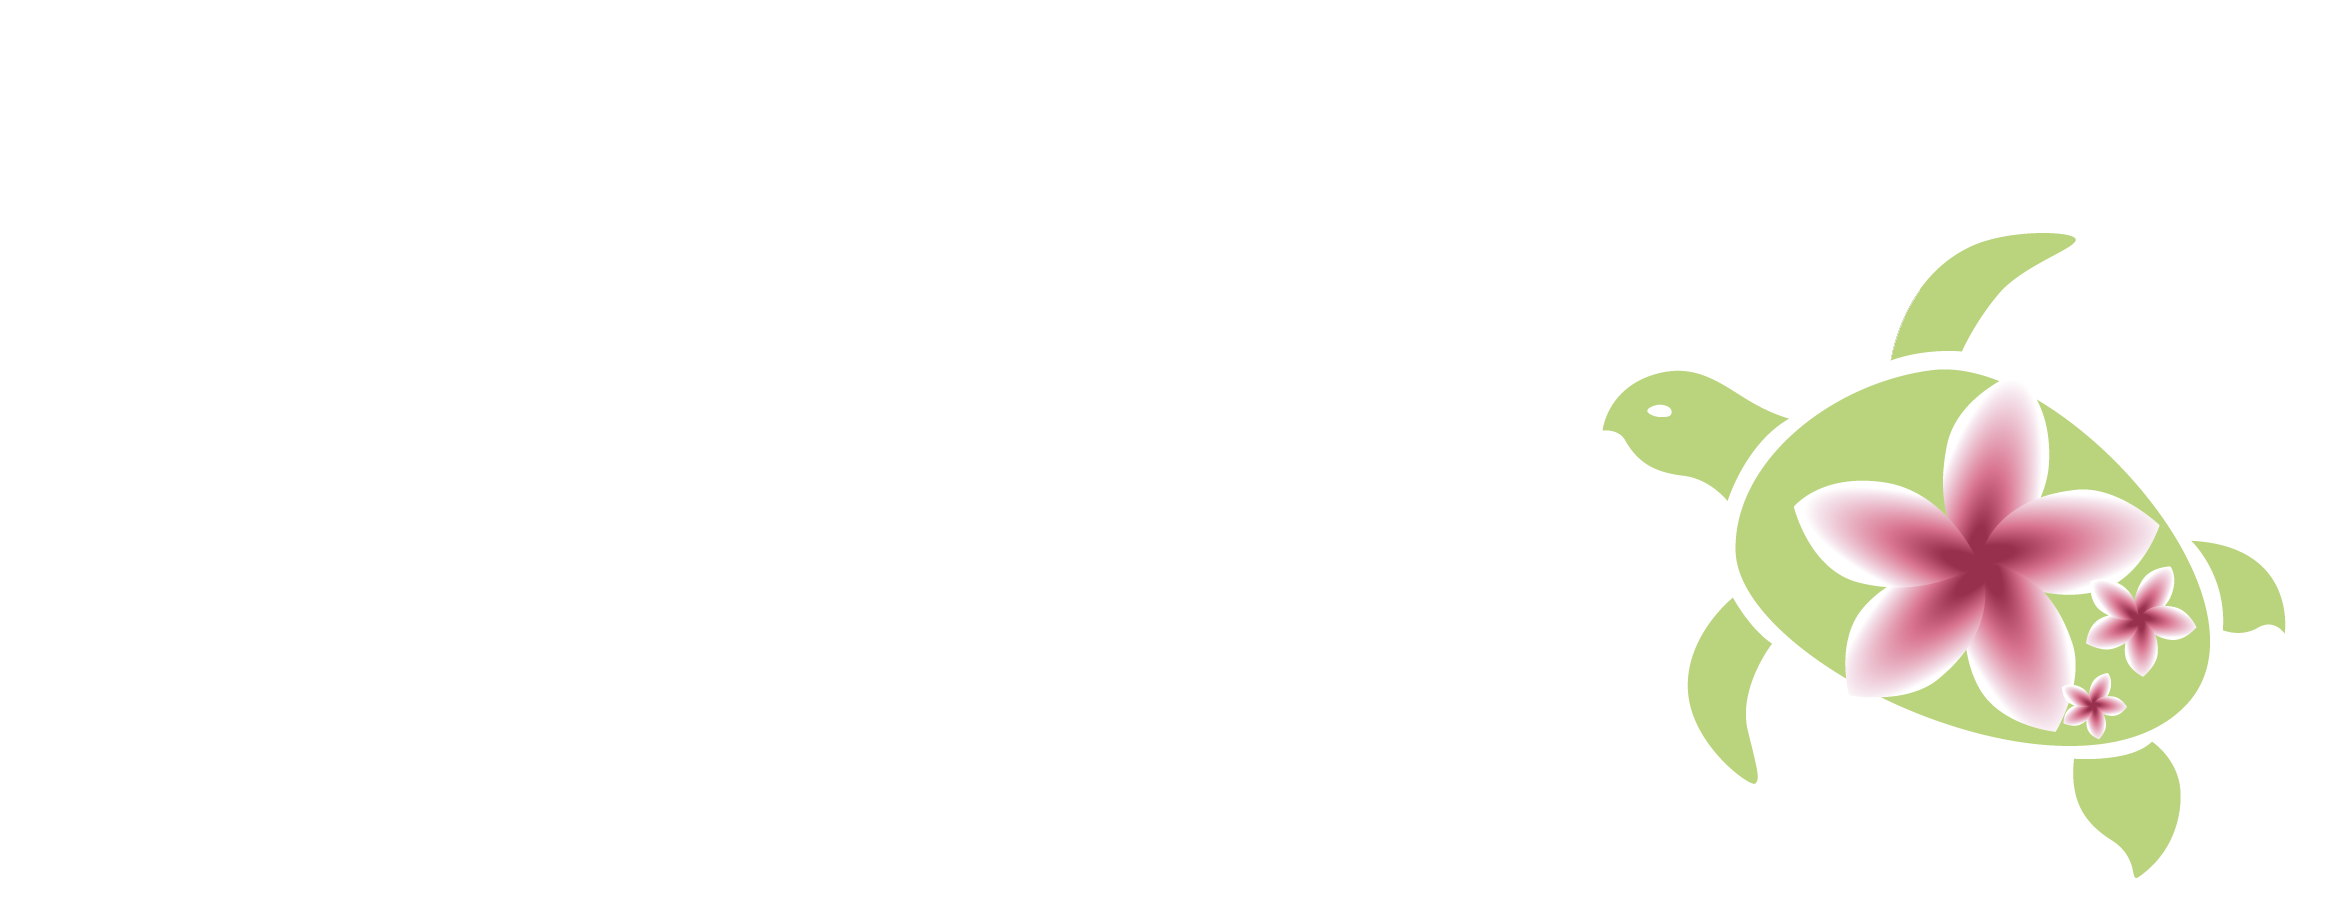 Doc Guzman